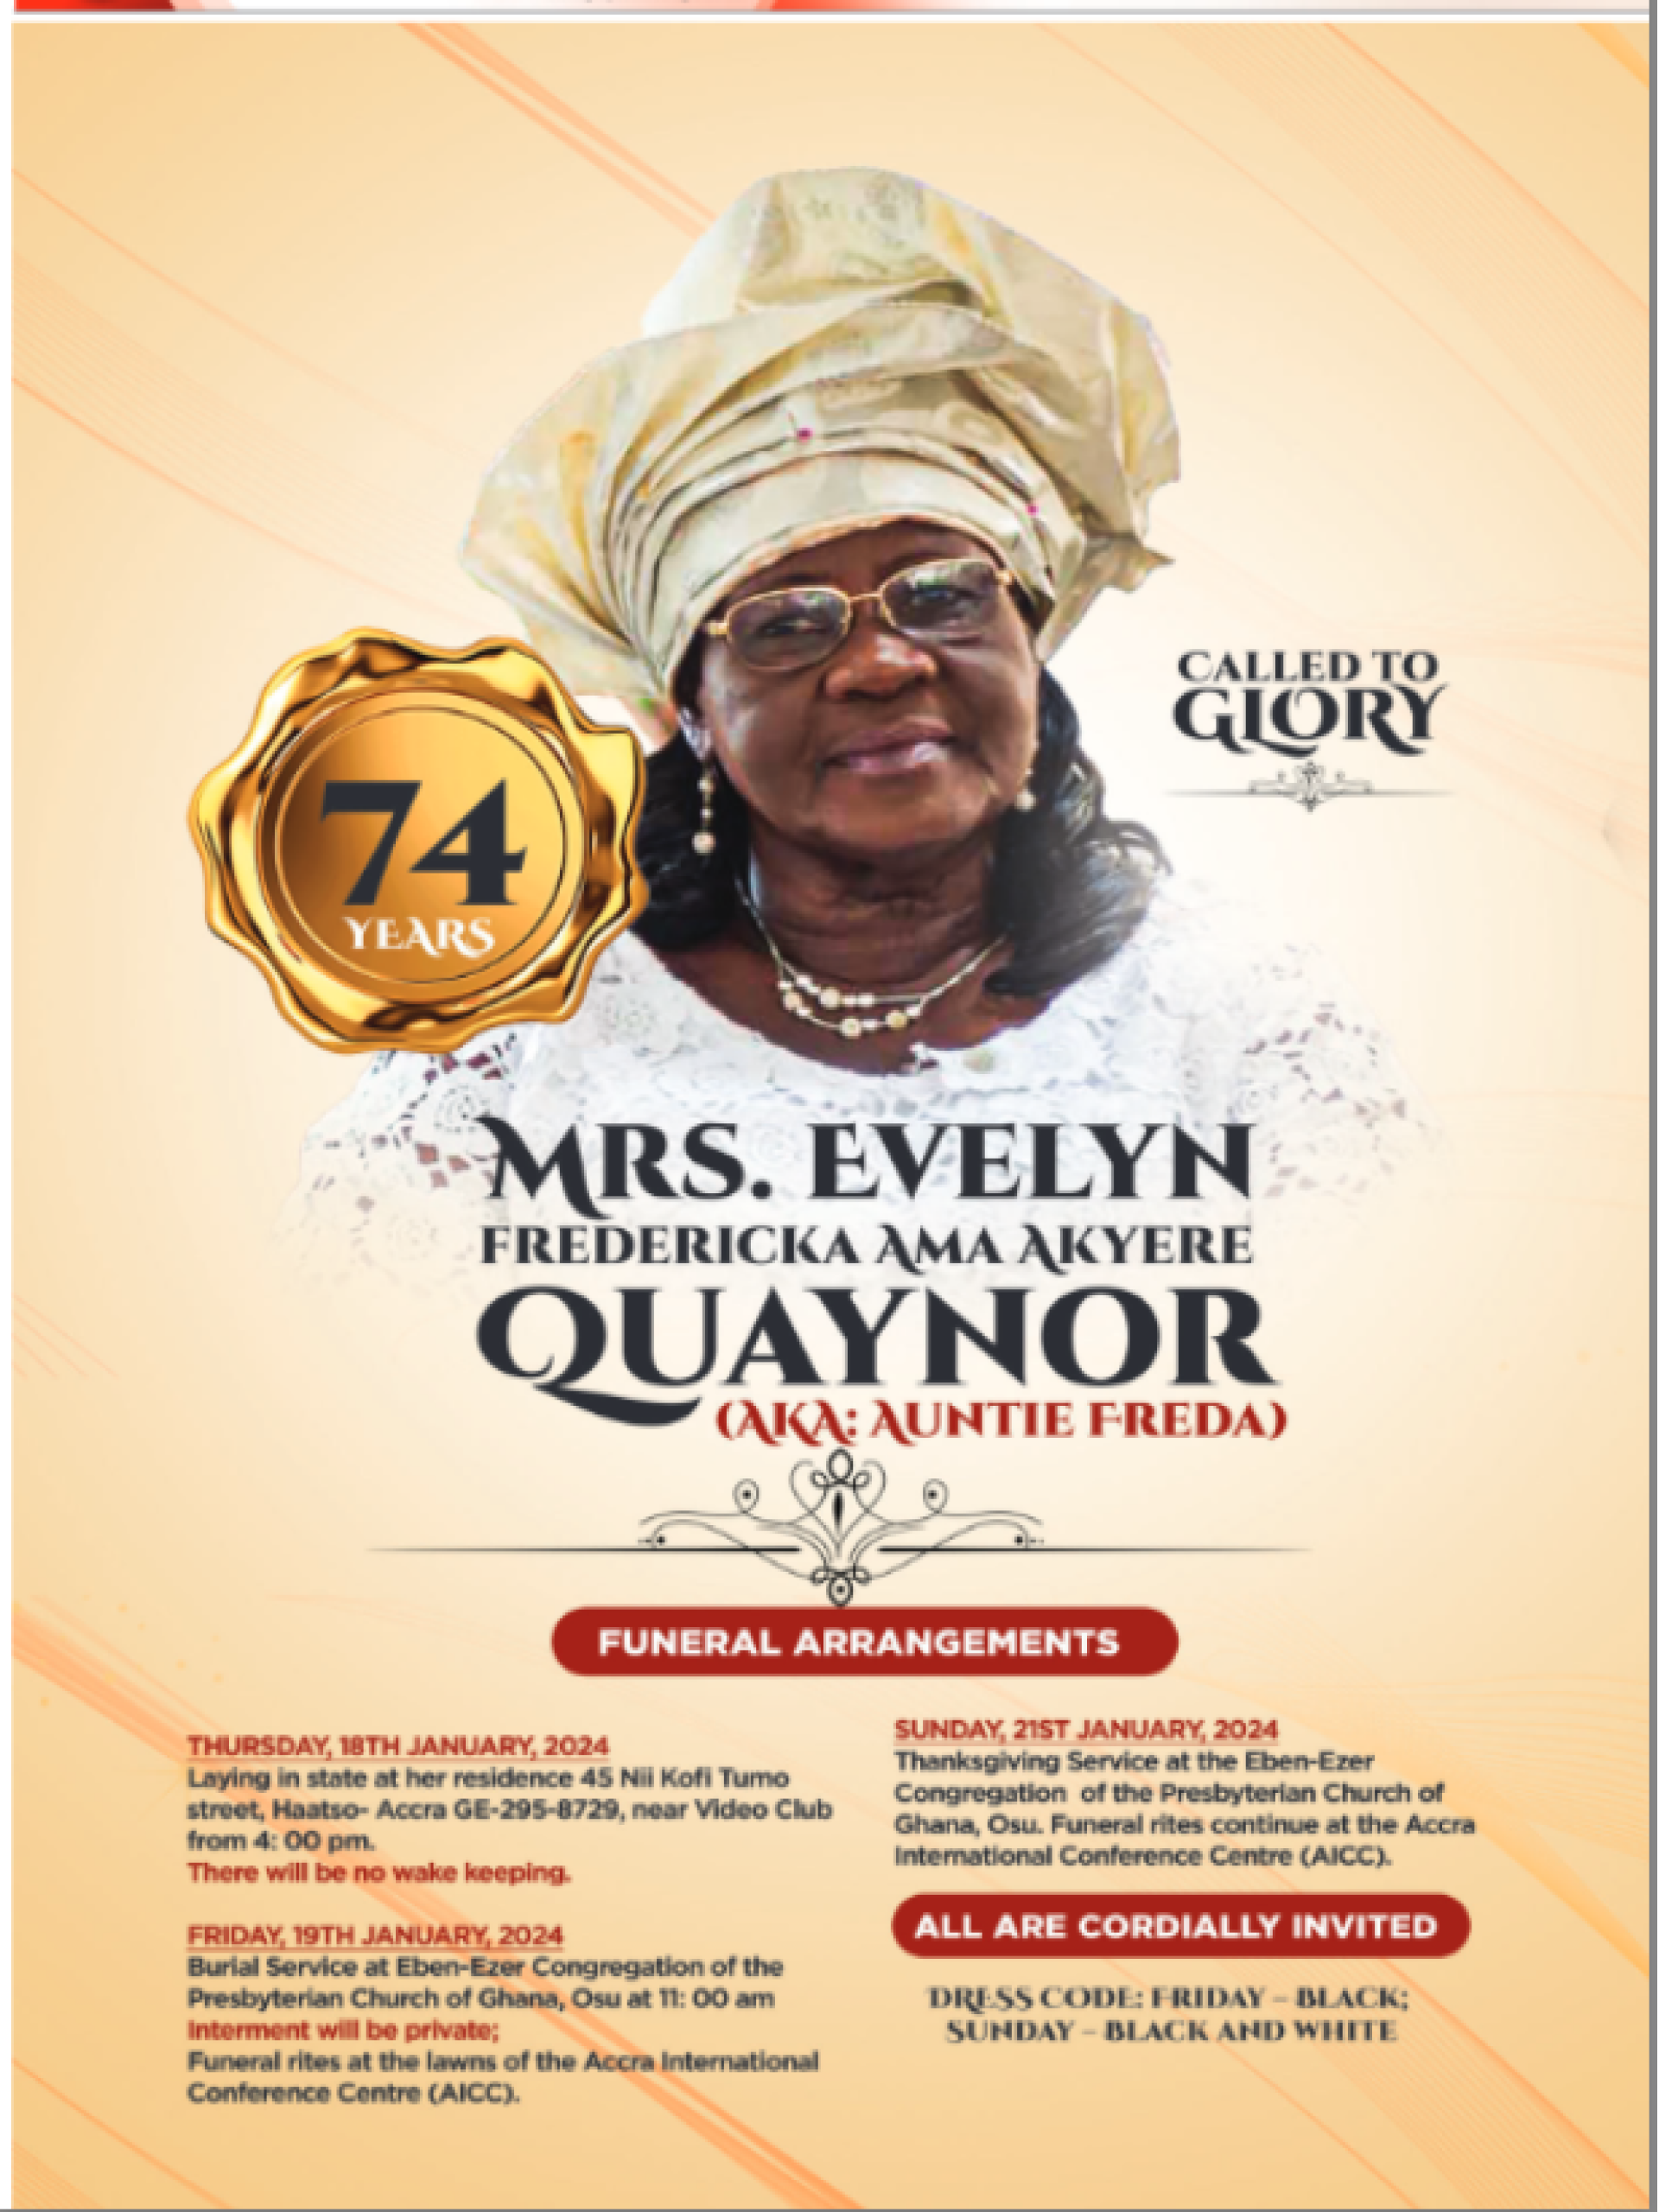 Mrs. Evelyn Fredericka Ama Akyere Quaynor